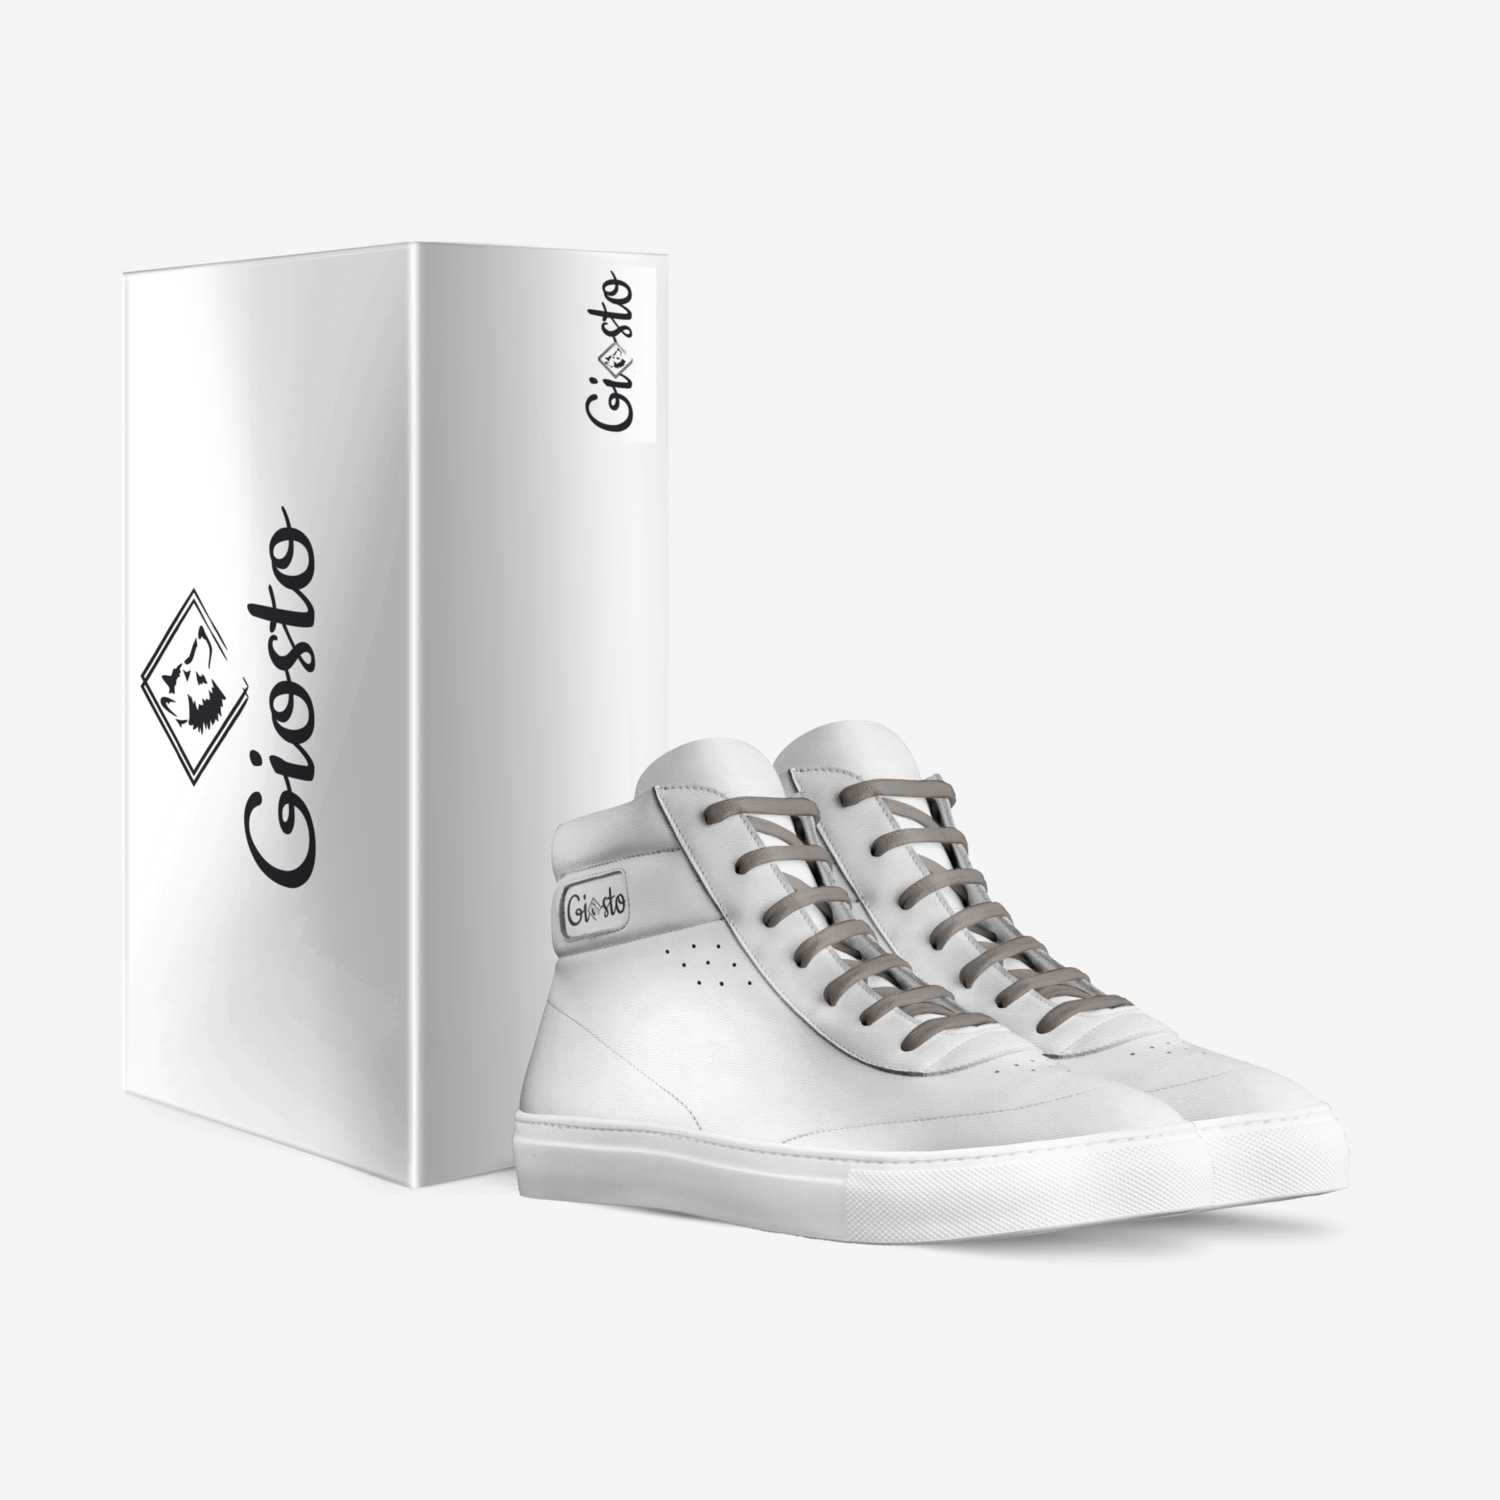 Giosto W custom made in Italy shoes by Giorgio Franco | Box view